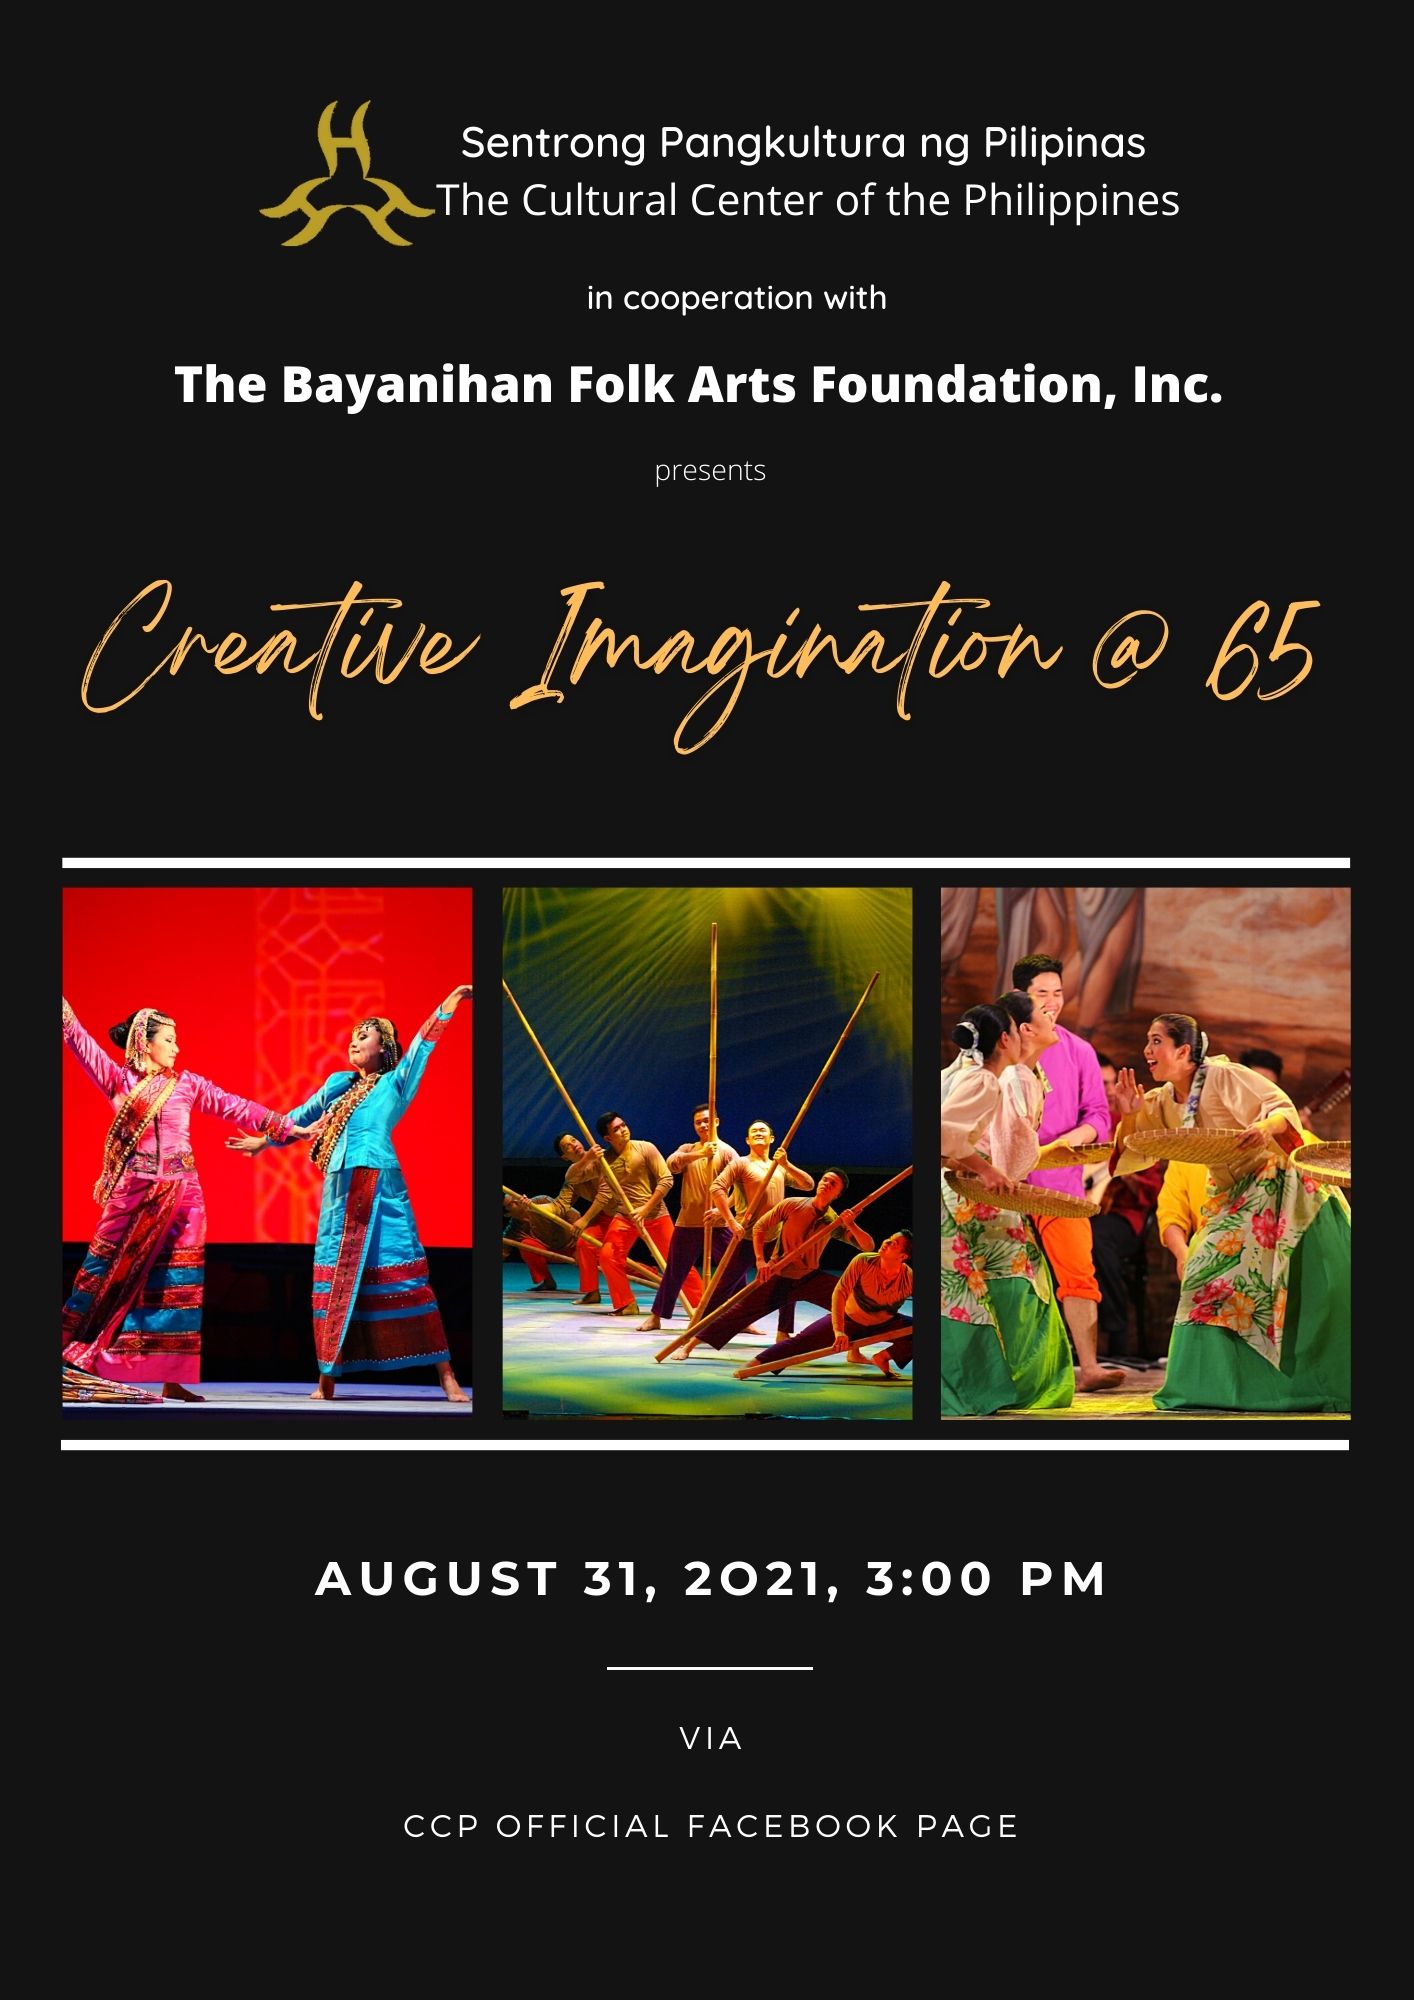 Ccps Bayanihan National Folk Dance Companys Creative Imagination 65 Pinoy Movies Hub Full